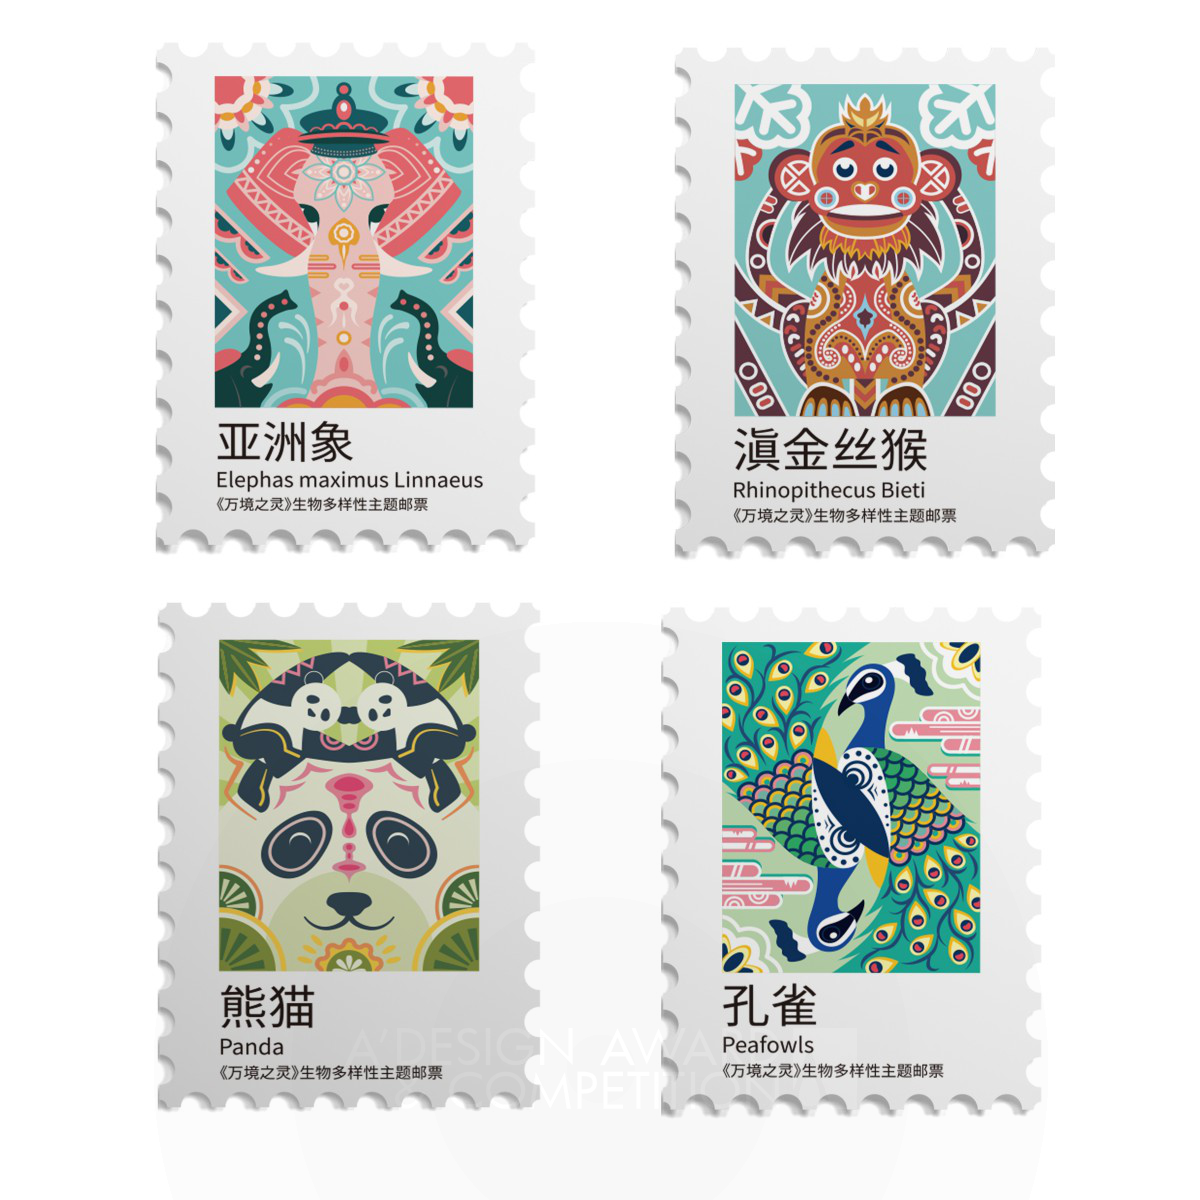  Stamp Illustration 